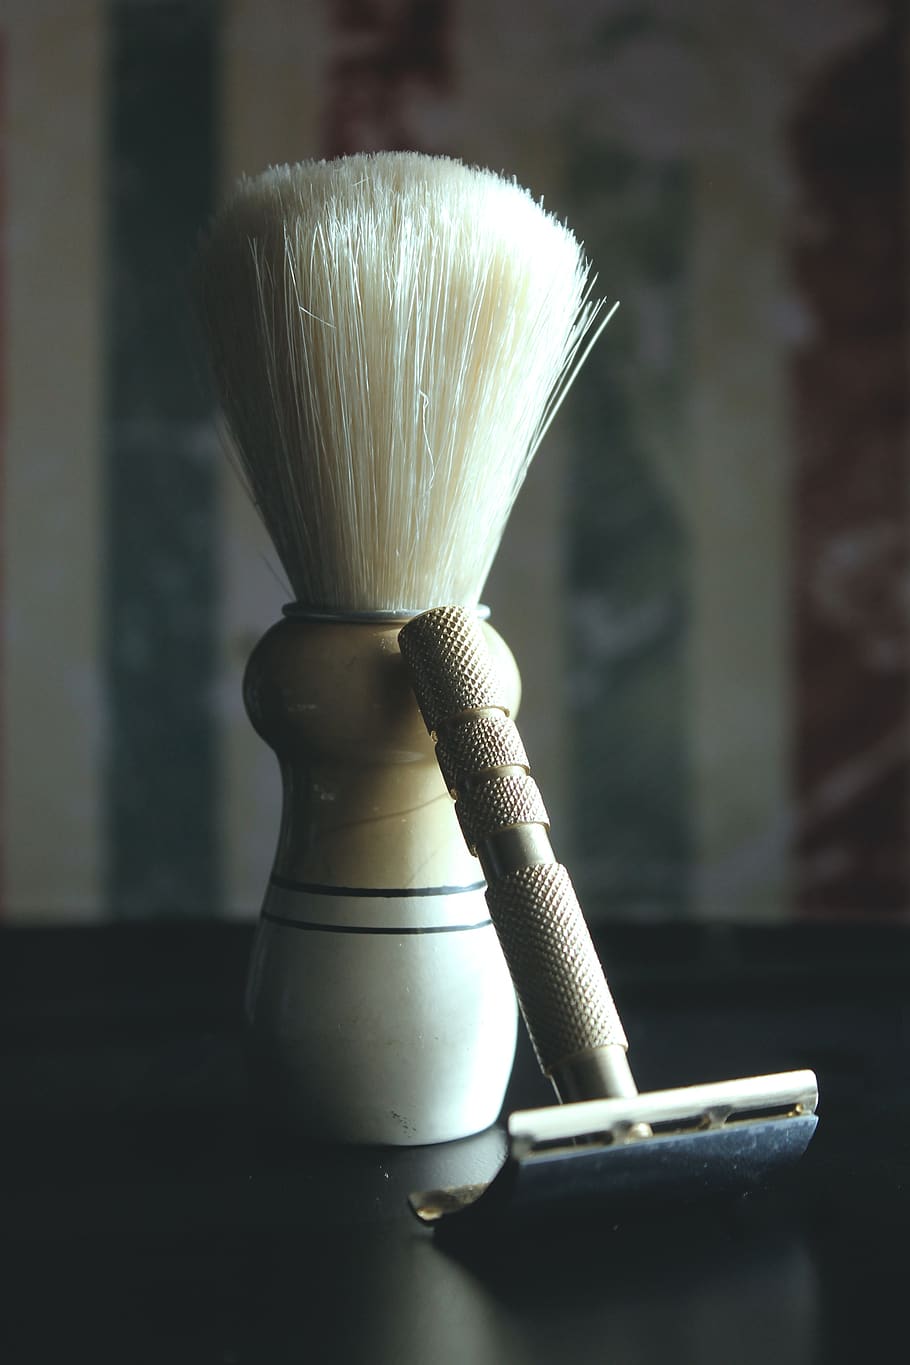 razor, shaving brush holders, hair, shaving, retro, old, antique, traditional, style, body cleansing